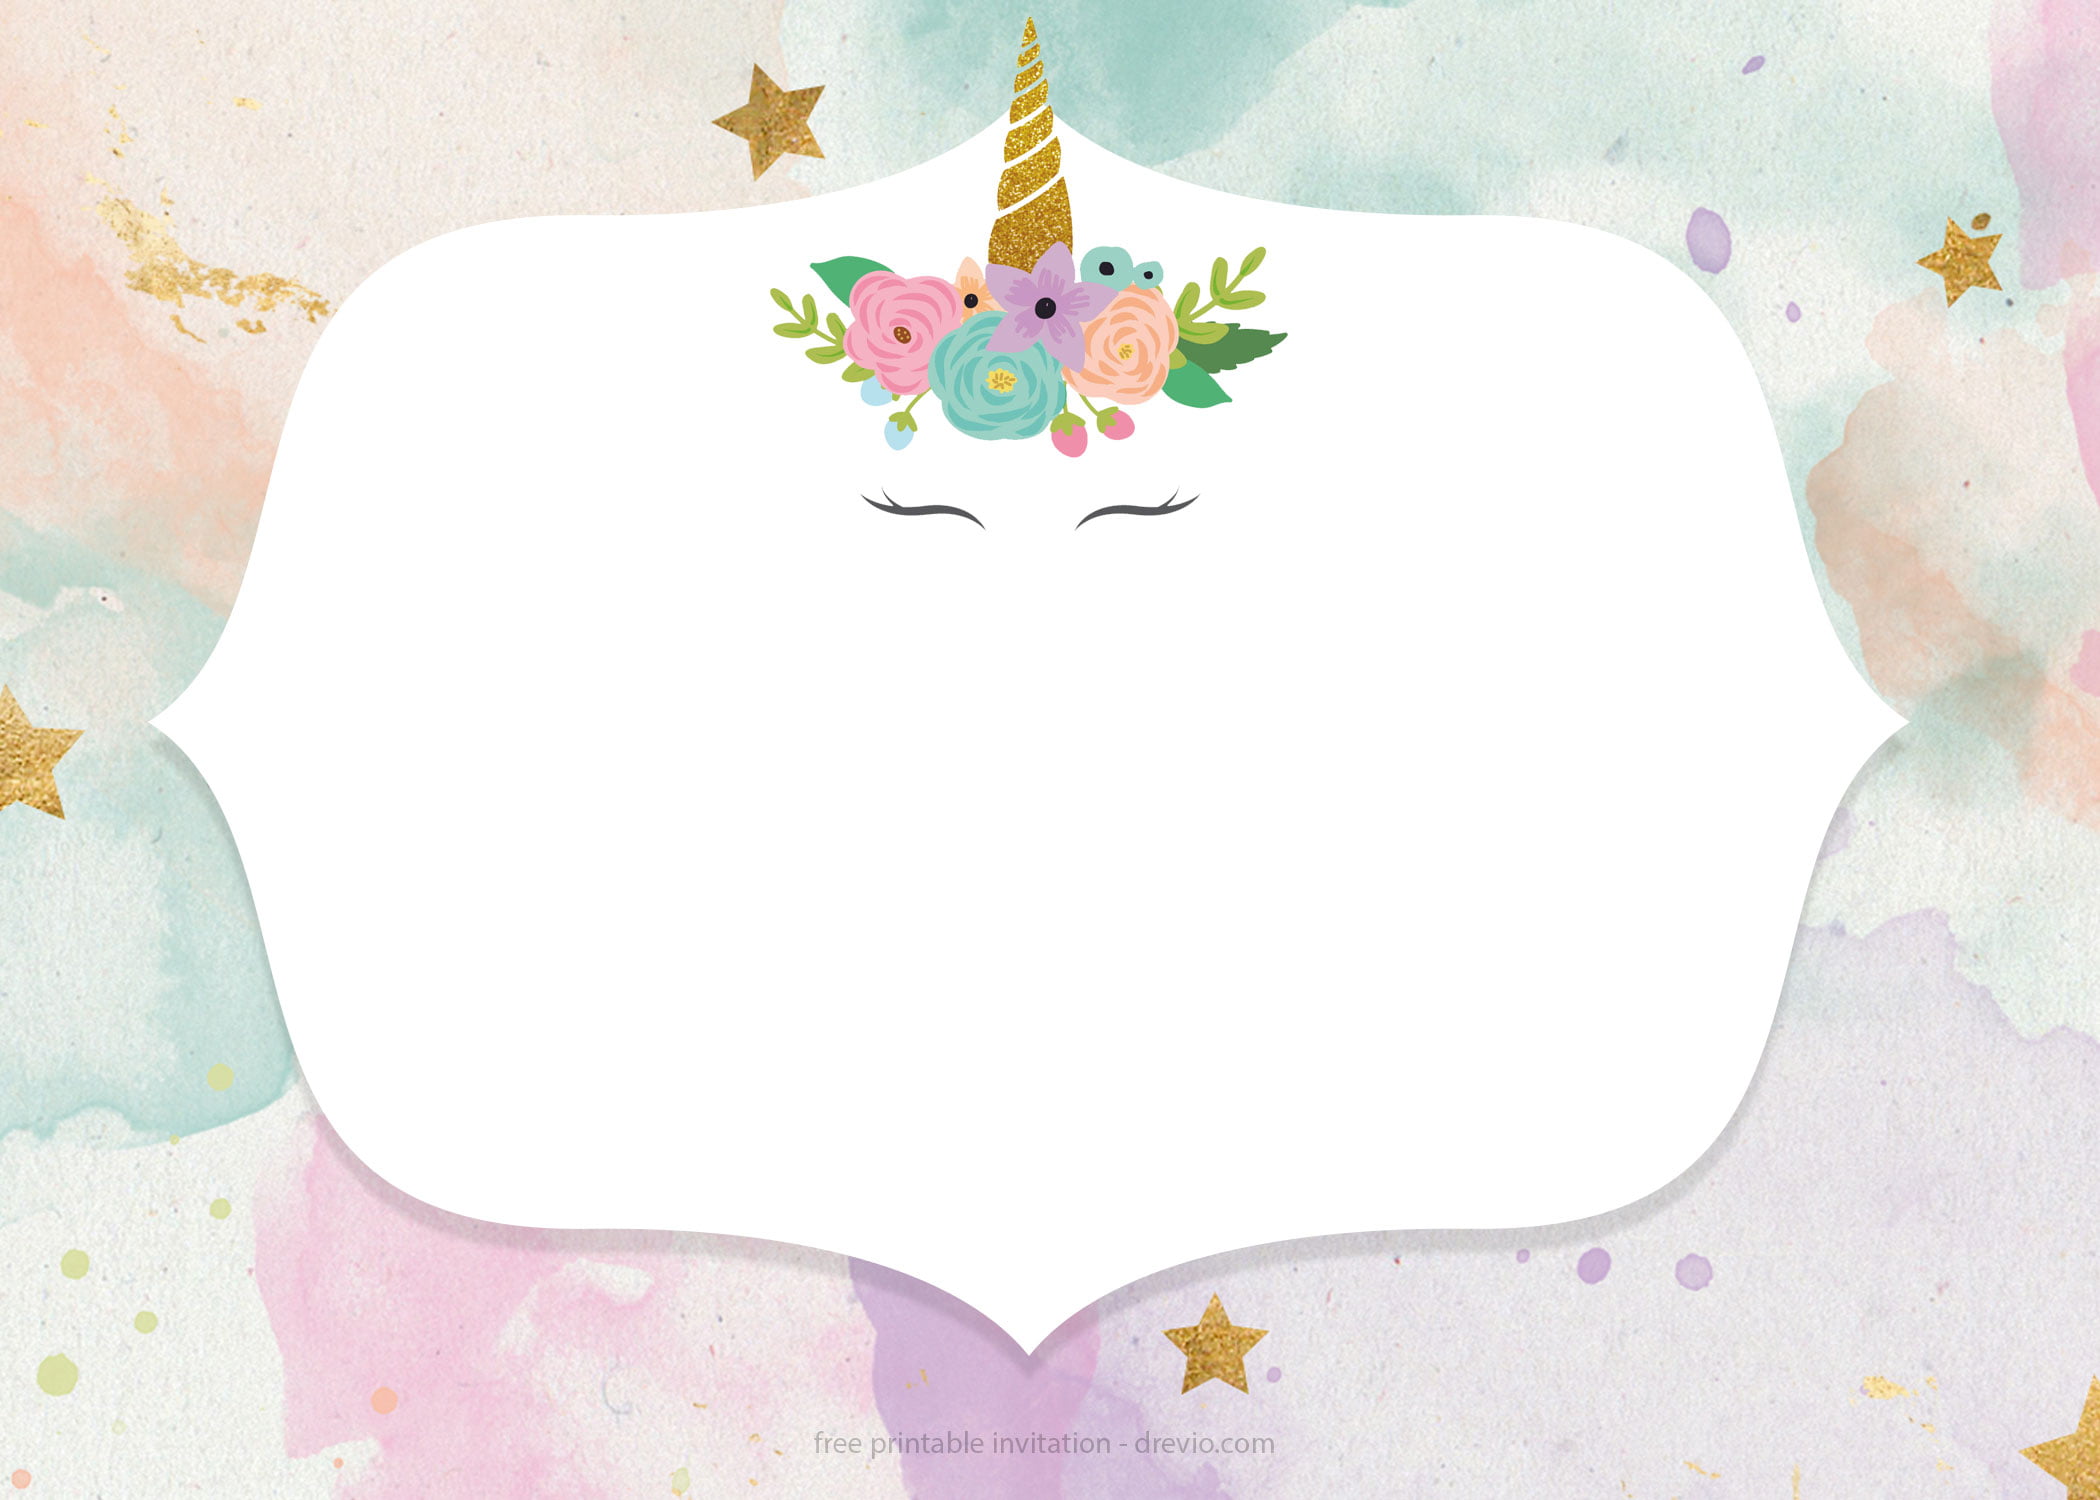 FREE Whimsical Pastel Unicorn Birthday Invitation Templates Download